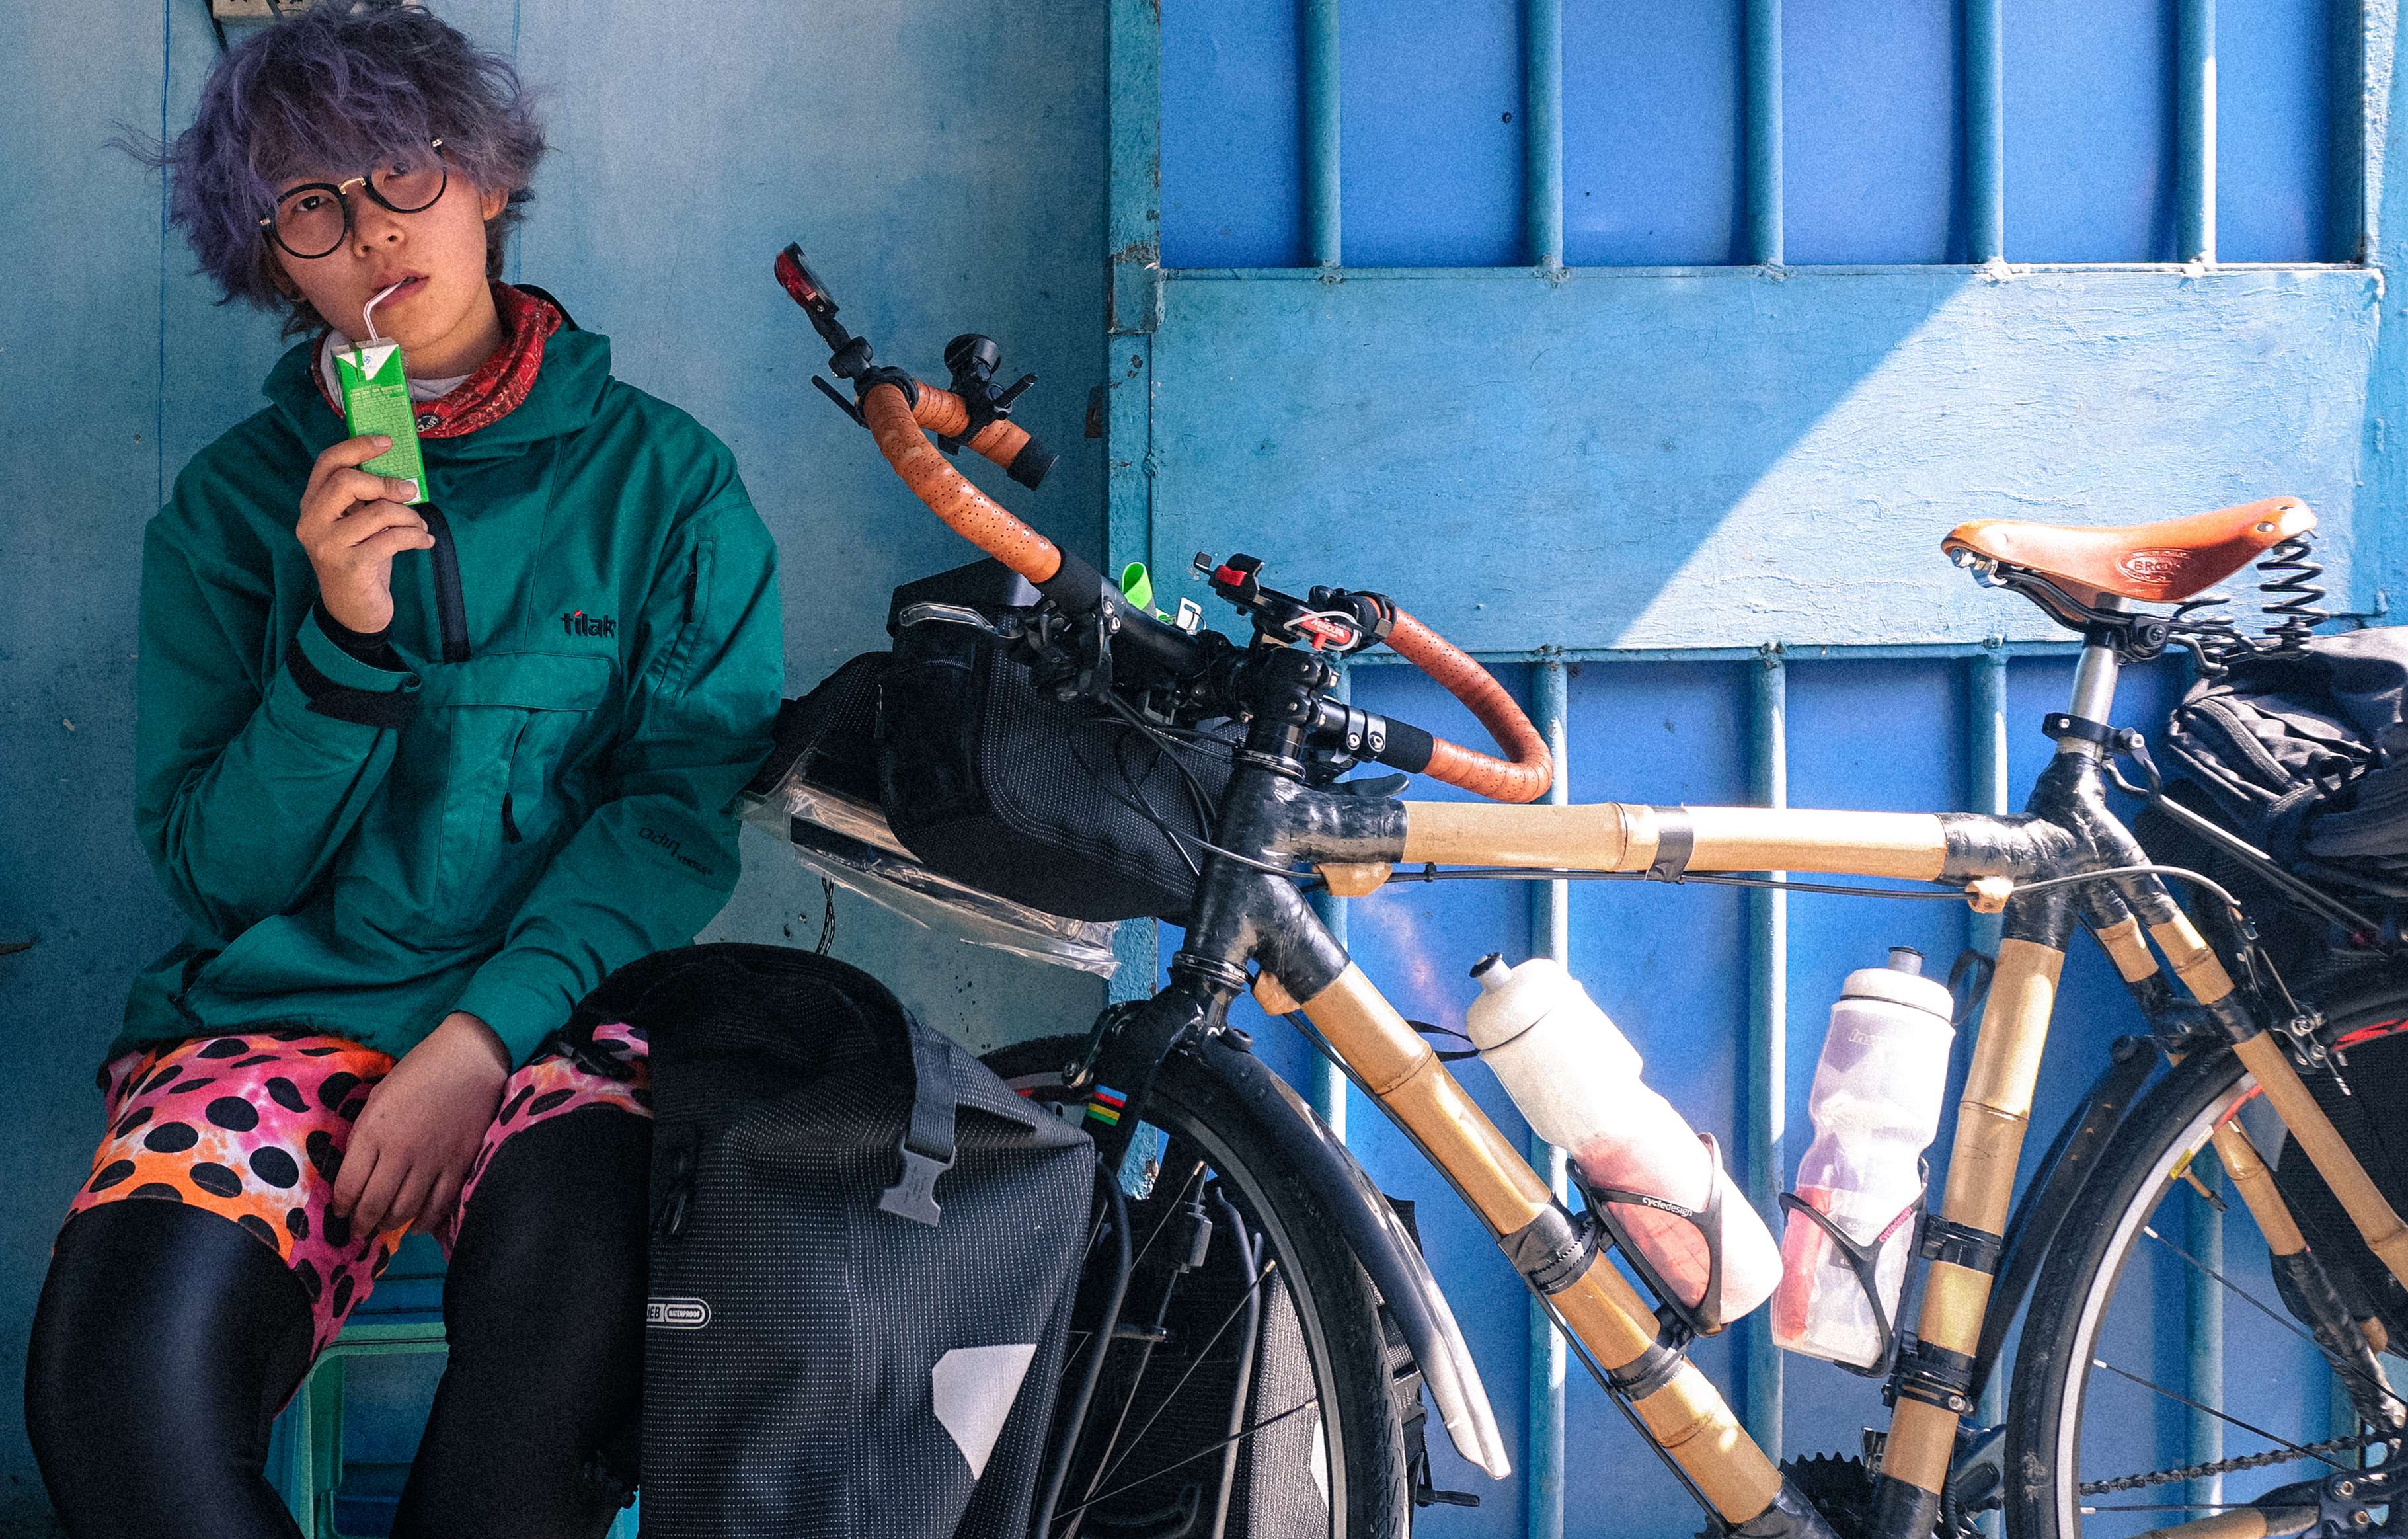 Chan Yanki with her bike. Photo: Supplied